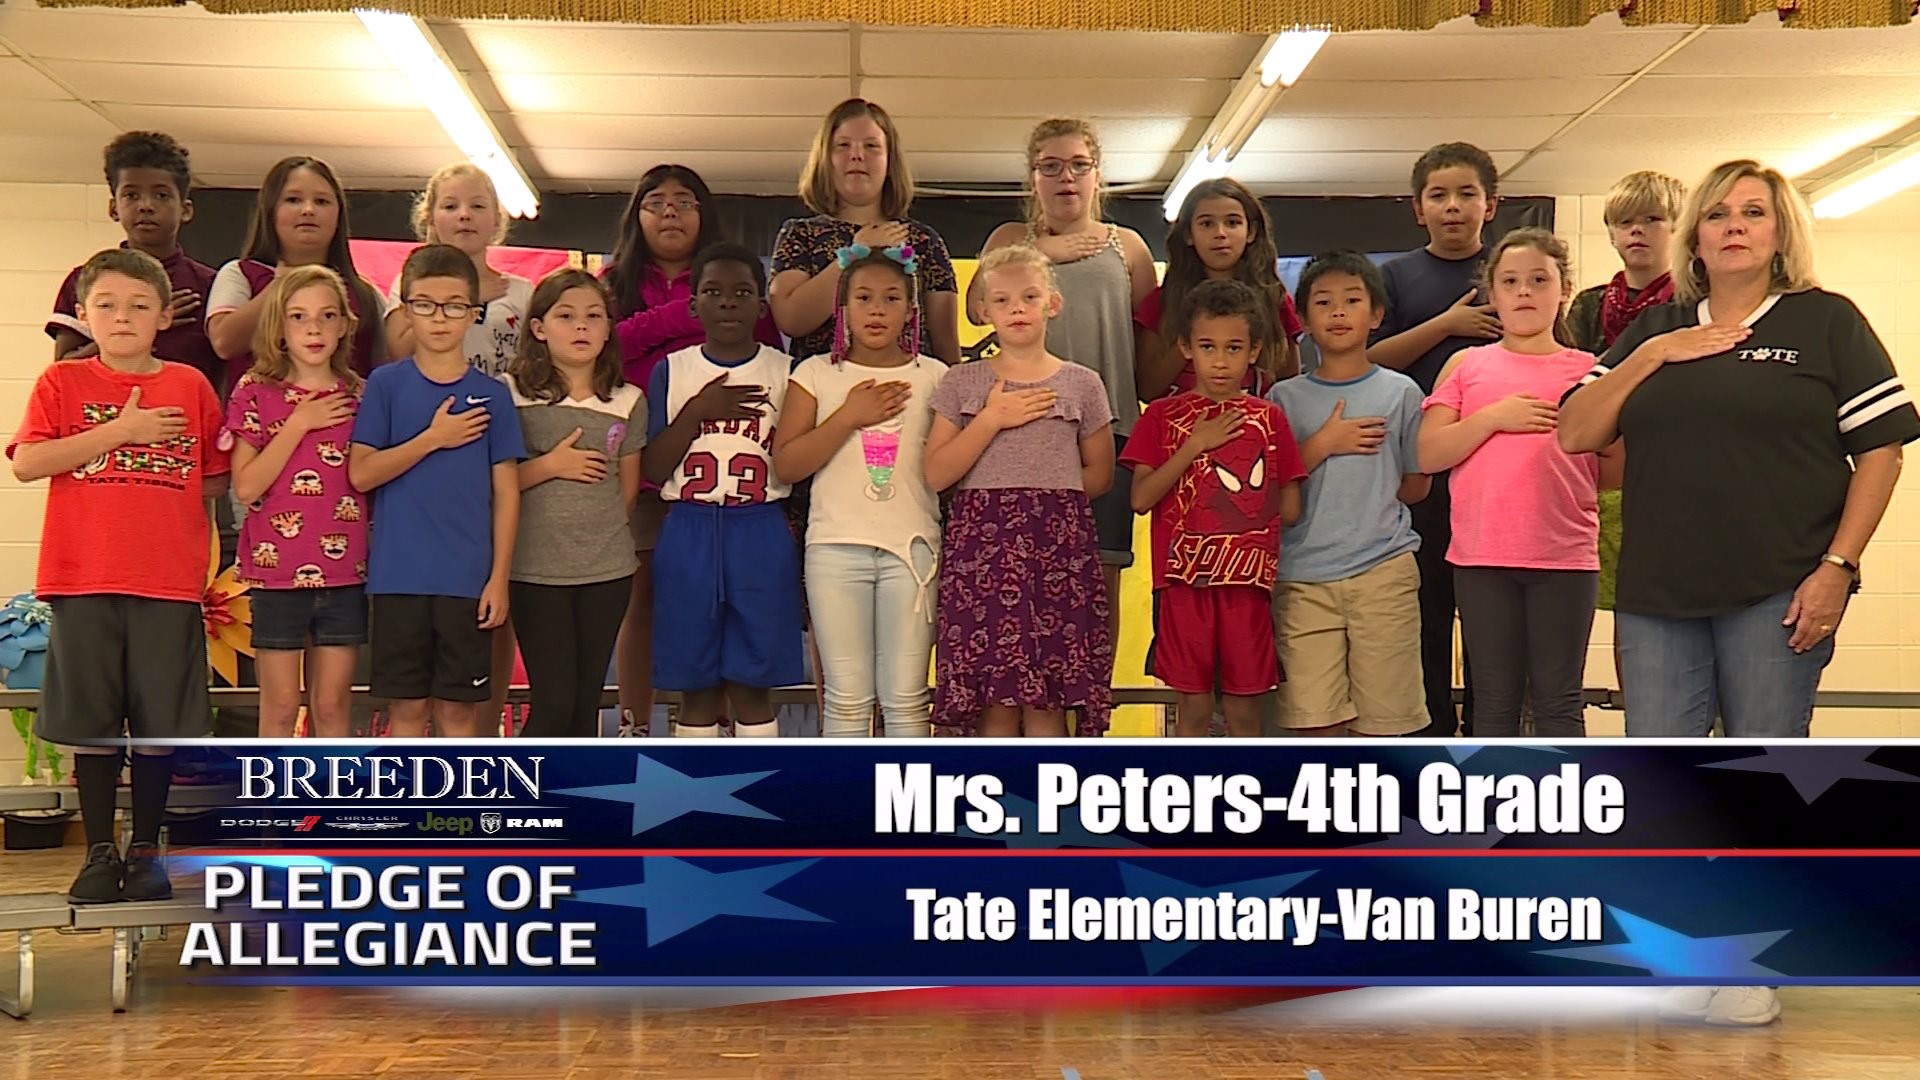 Mrs. Peters  4th Grade Tate Elementary, Van Buren